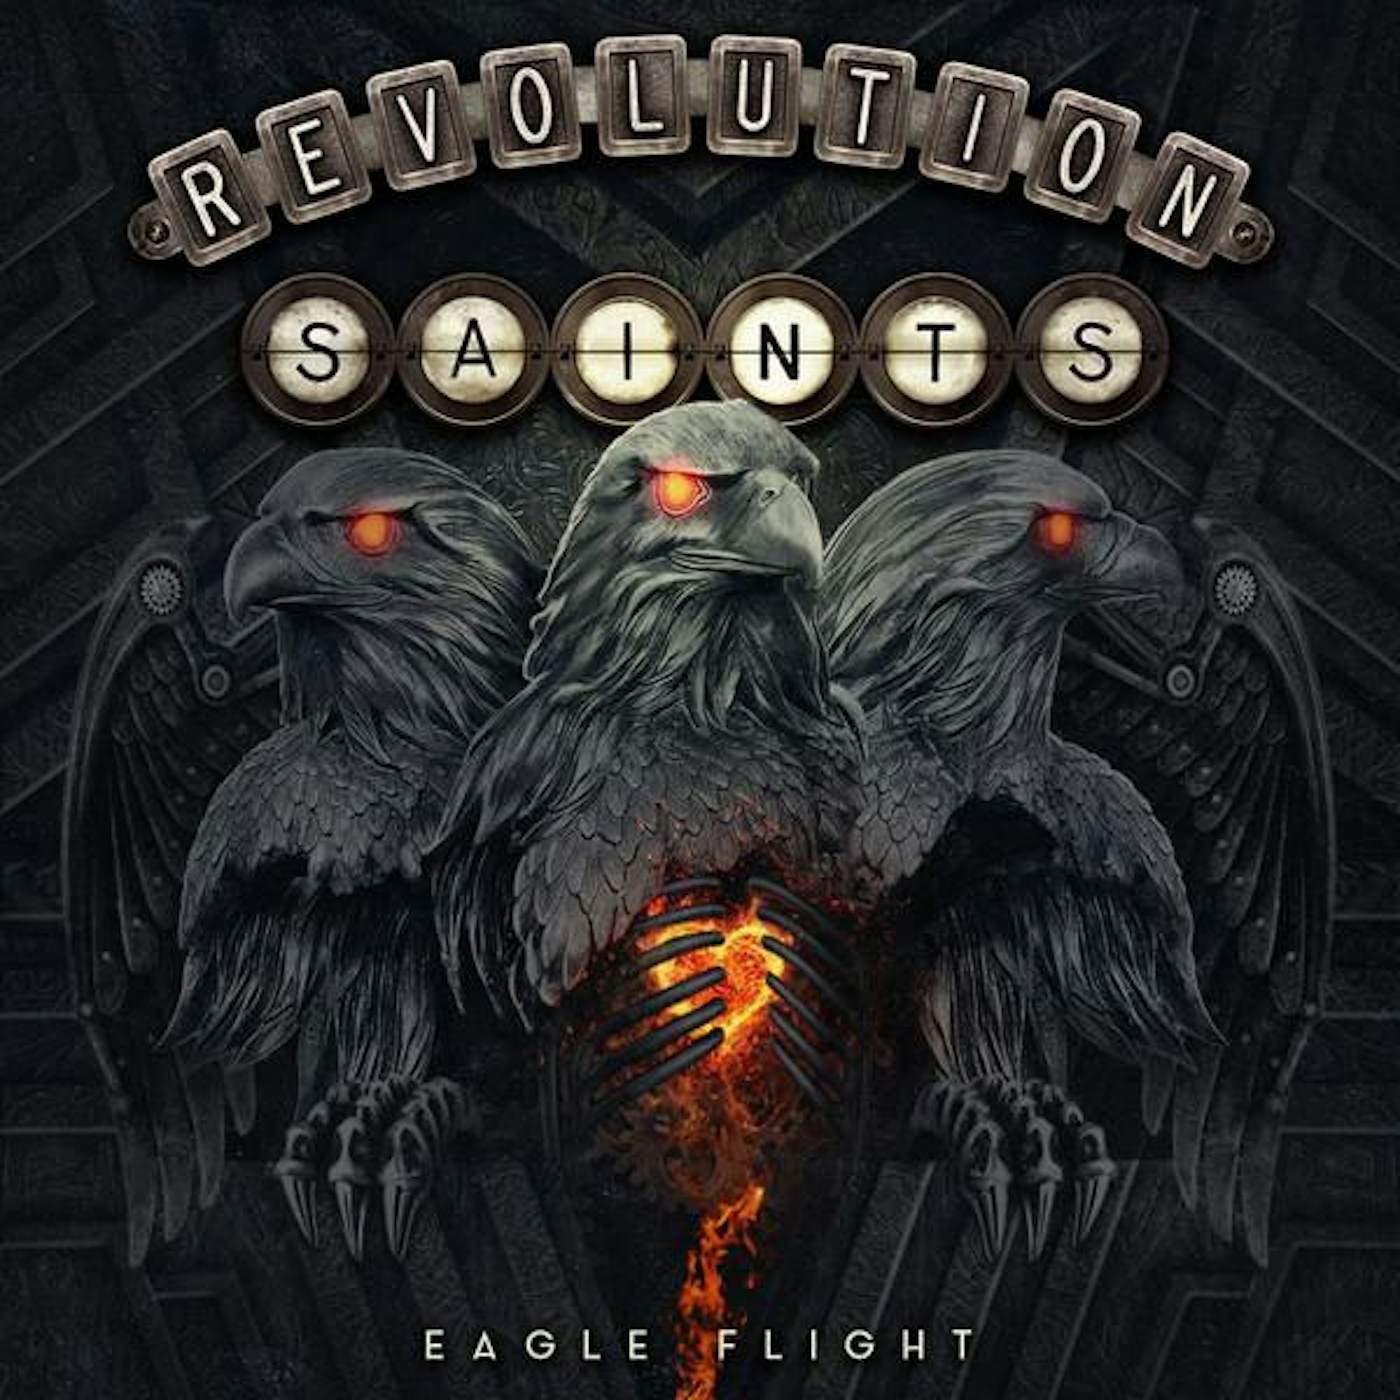 Revolution Saints EAGLE FIGHT CD